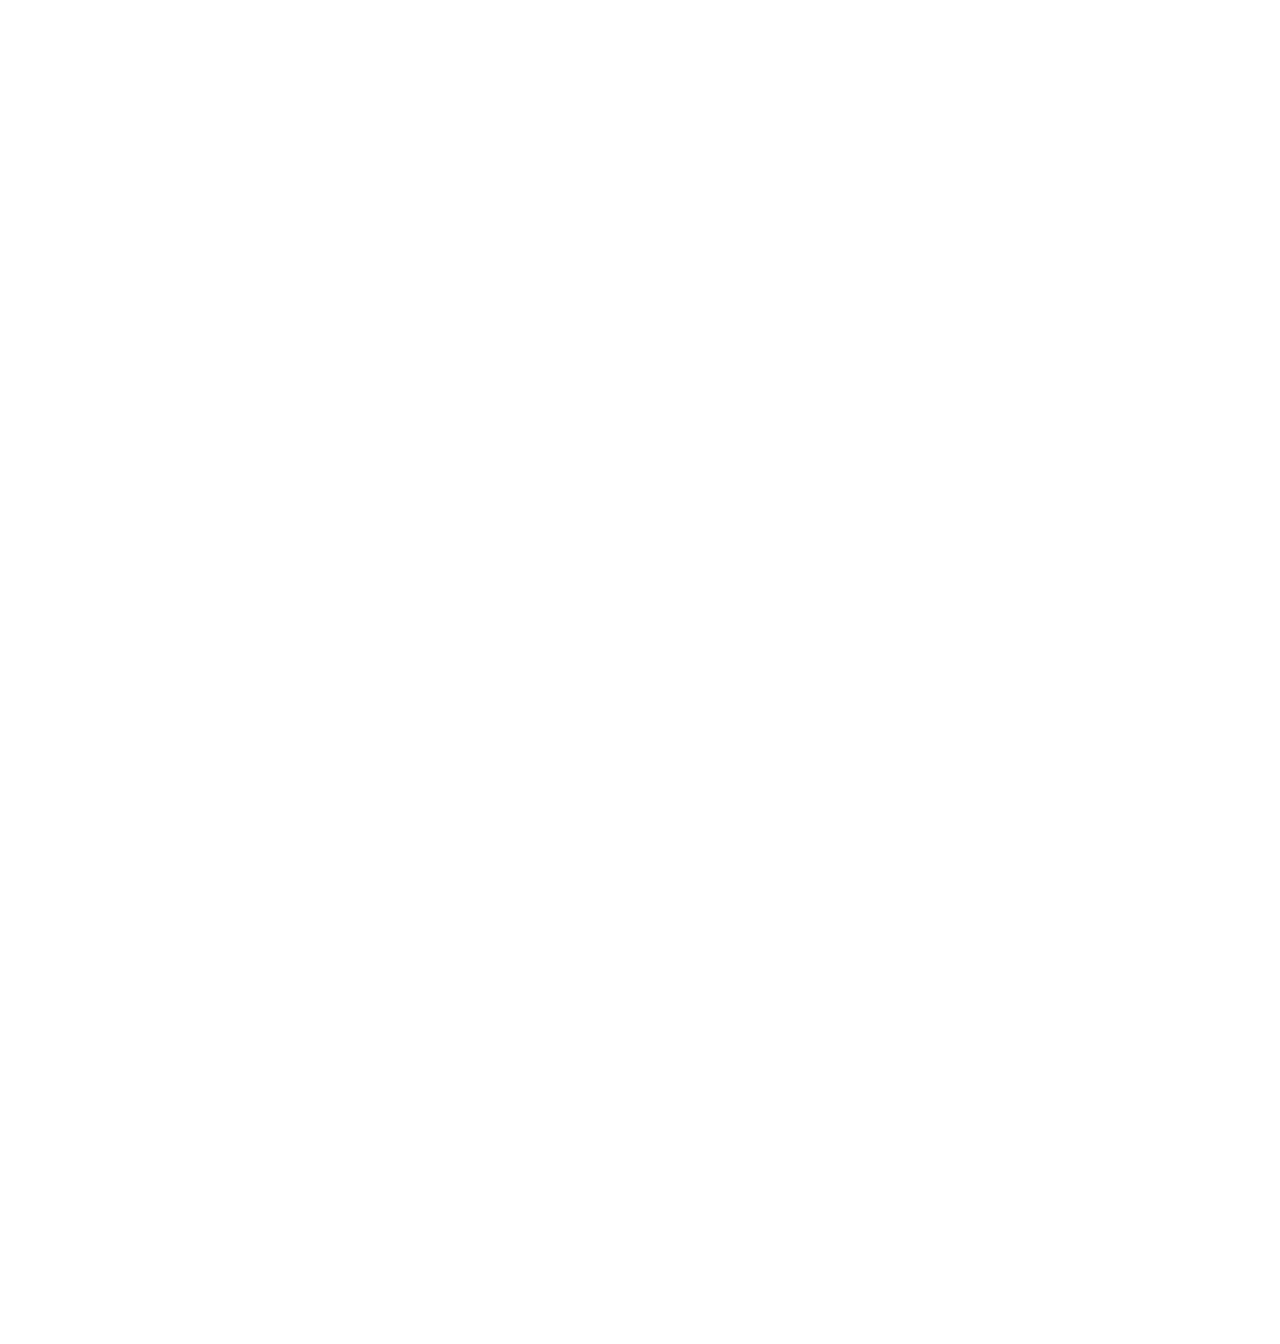 KOFI JOINT's logo